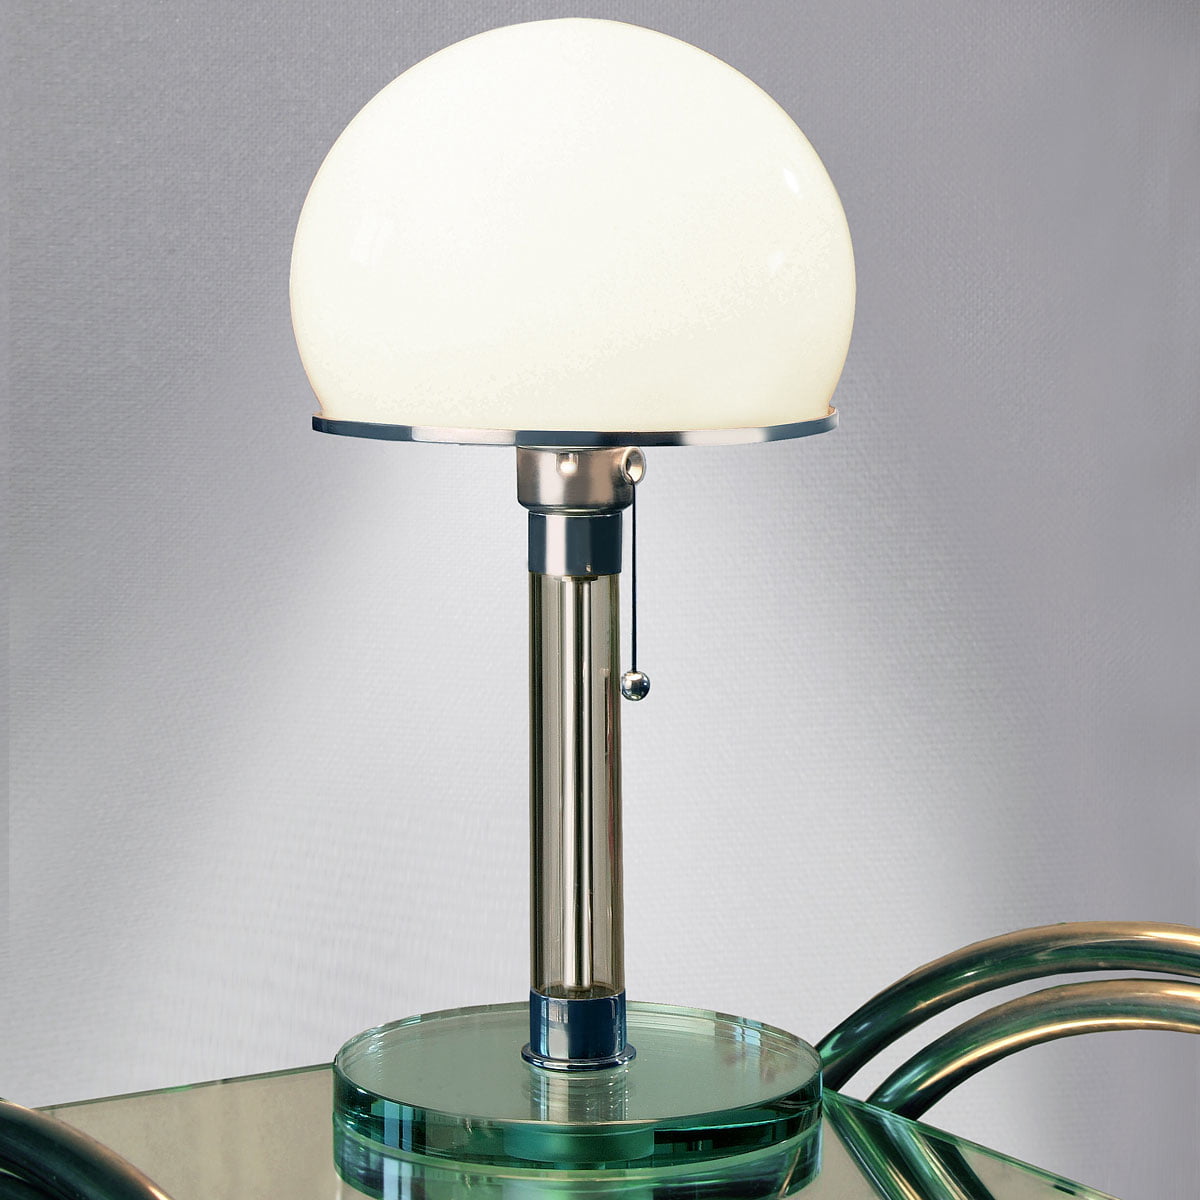 Dwaal Bulk Herrie Tecnolumen - Wagenfeld lamp WG 24 | Connox